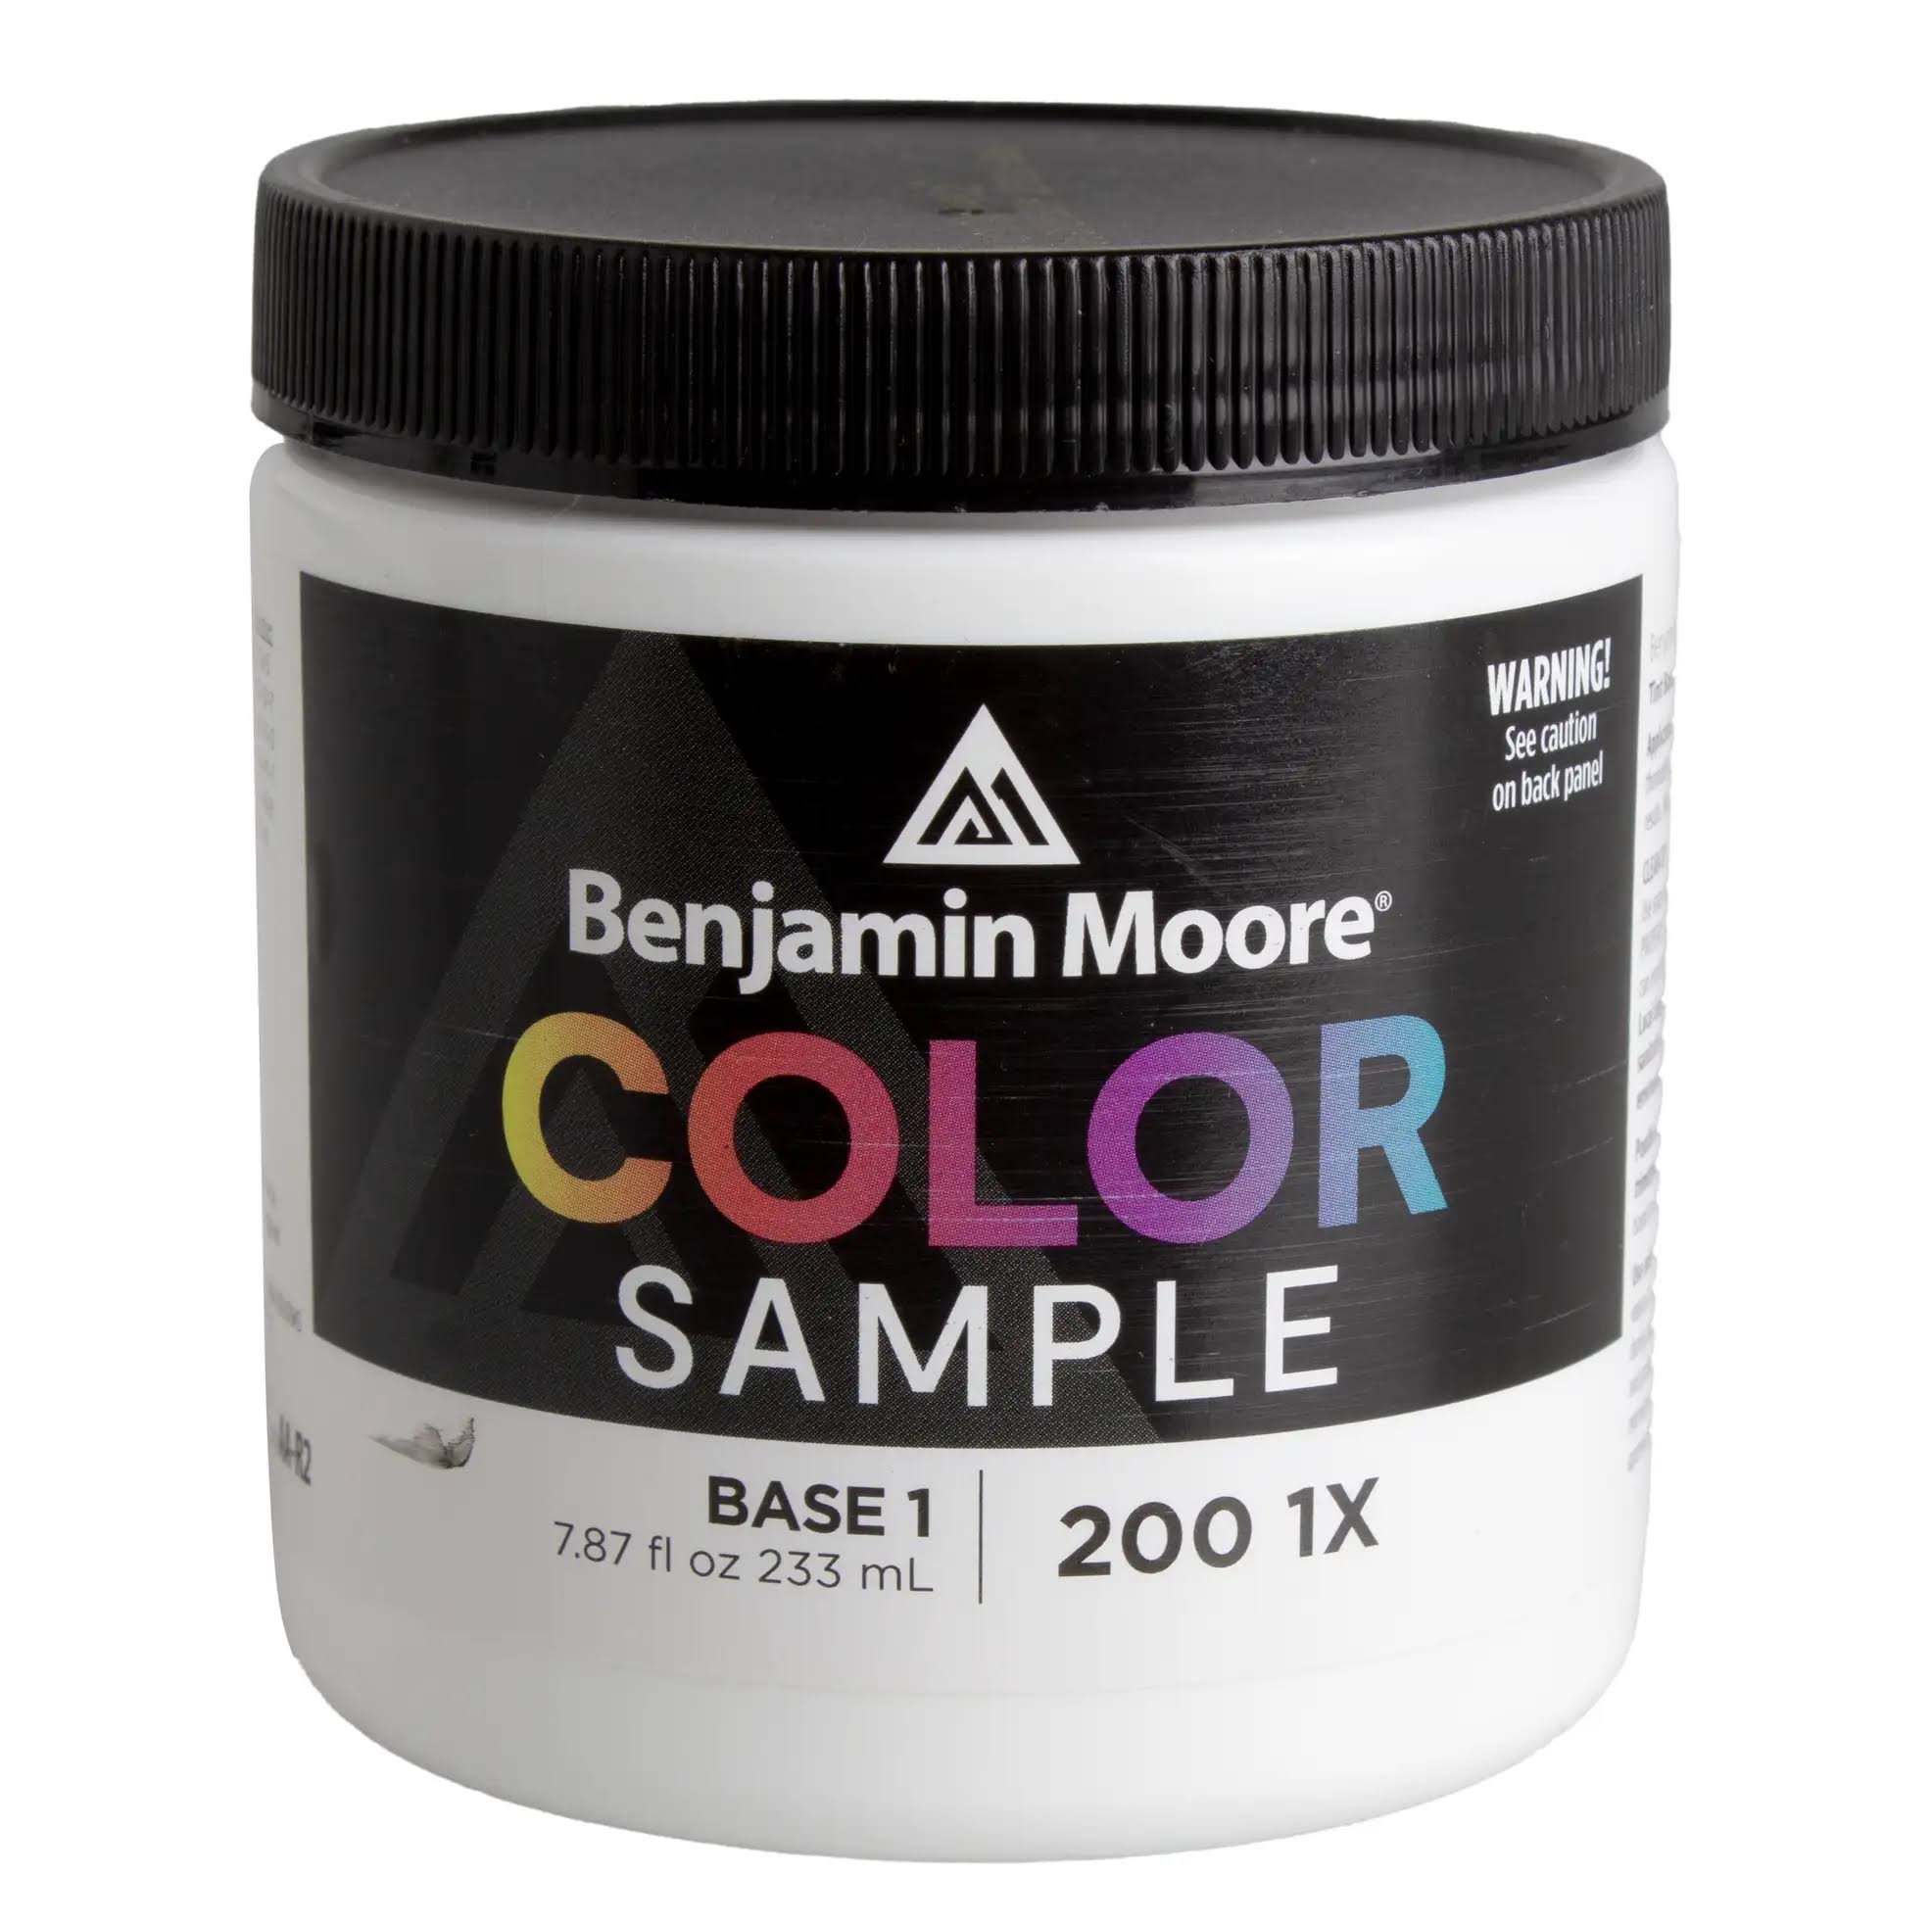 Benjamin Moore Eggshell Base 1 Paint Sample Interior 8 oz